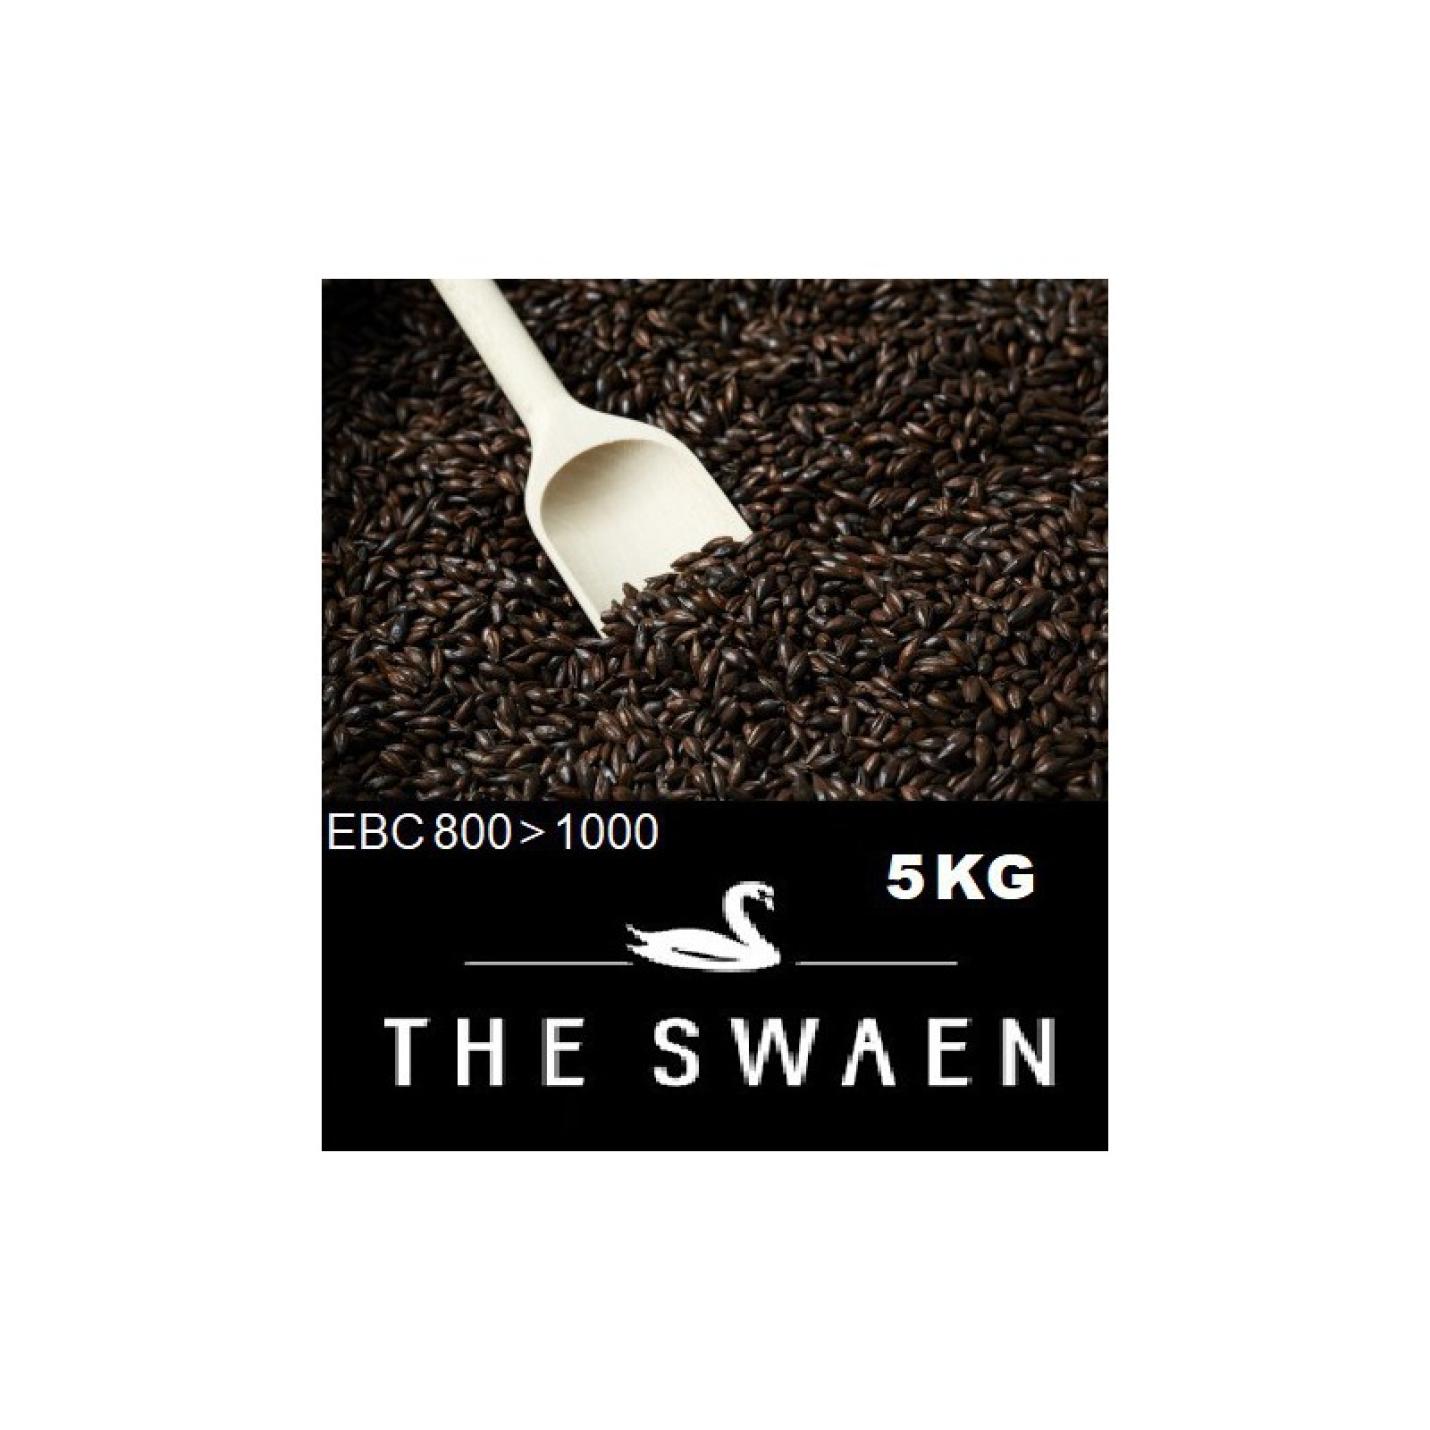 Chocolade mout B Black Swaen 5 Kg 800-1000 EBC tht 5-24